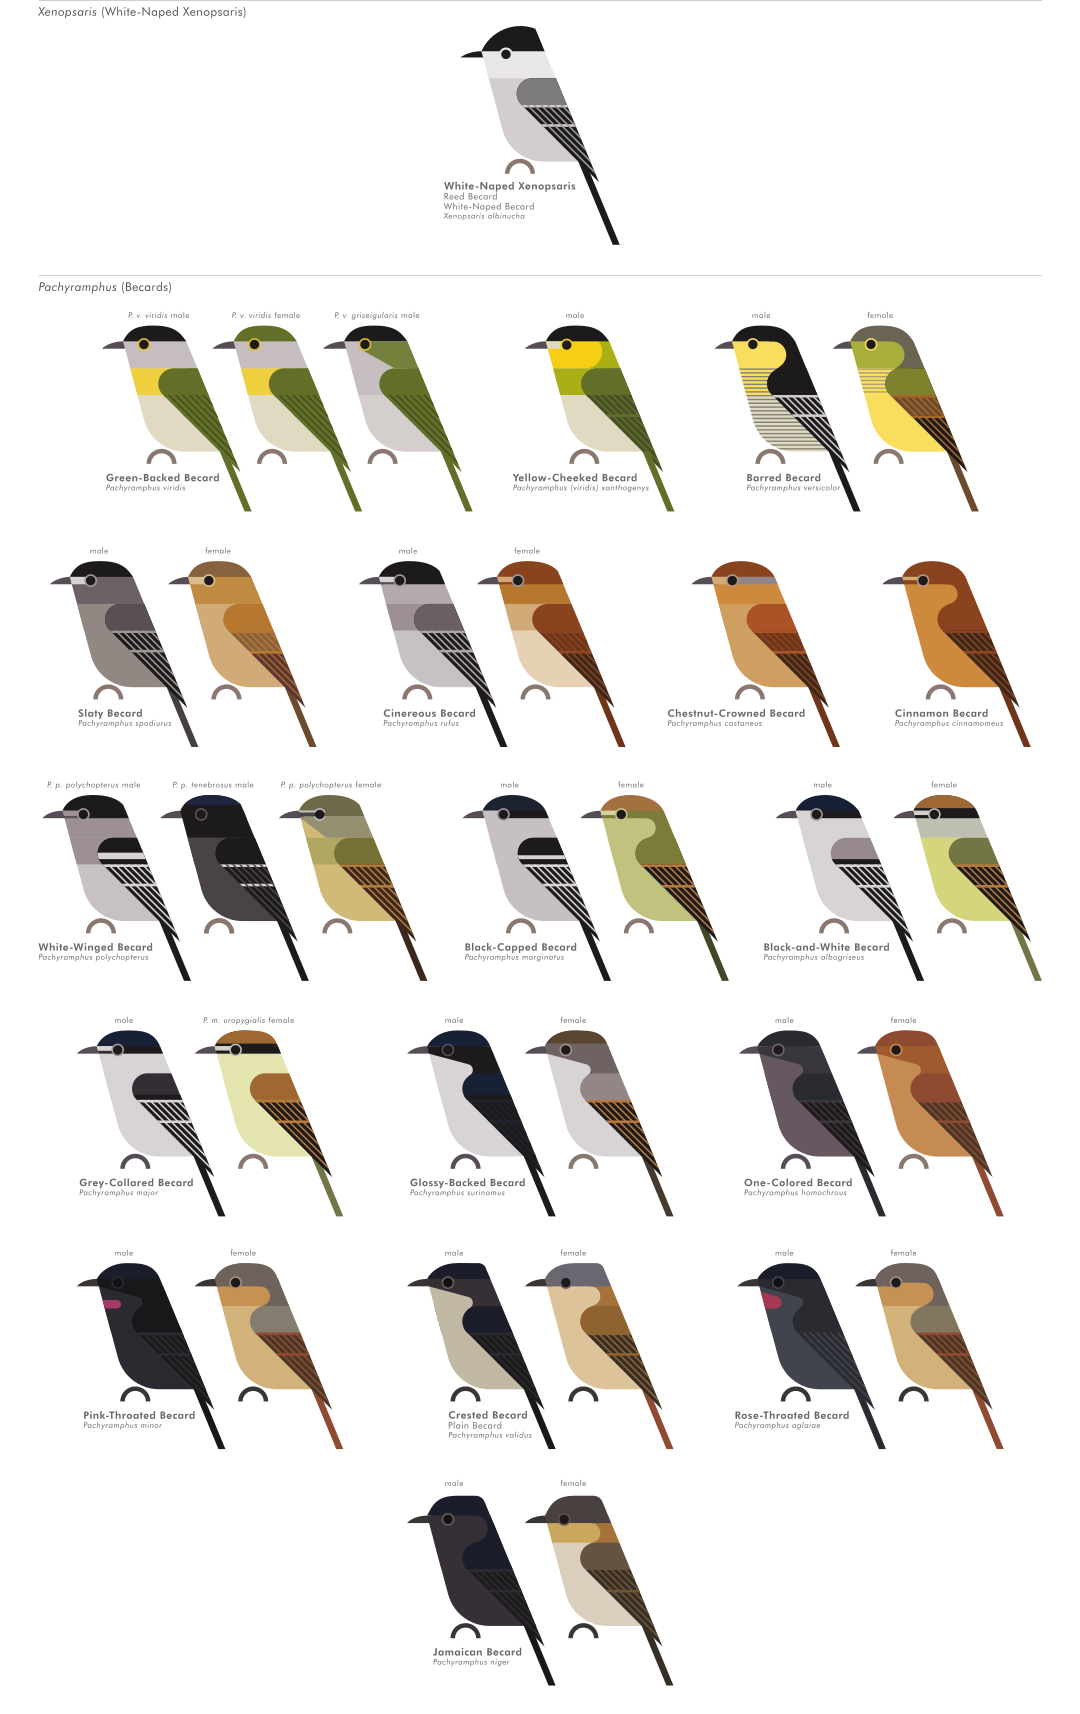 scott partridge - AVE - avian vector encyclopedia - becards - bird vector art